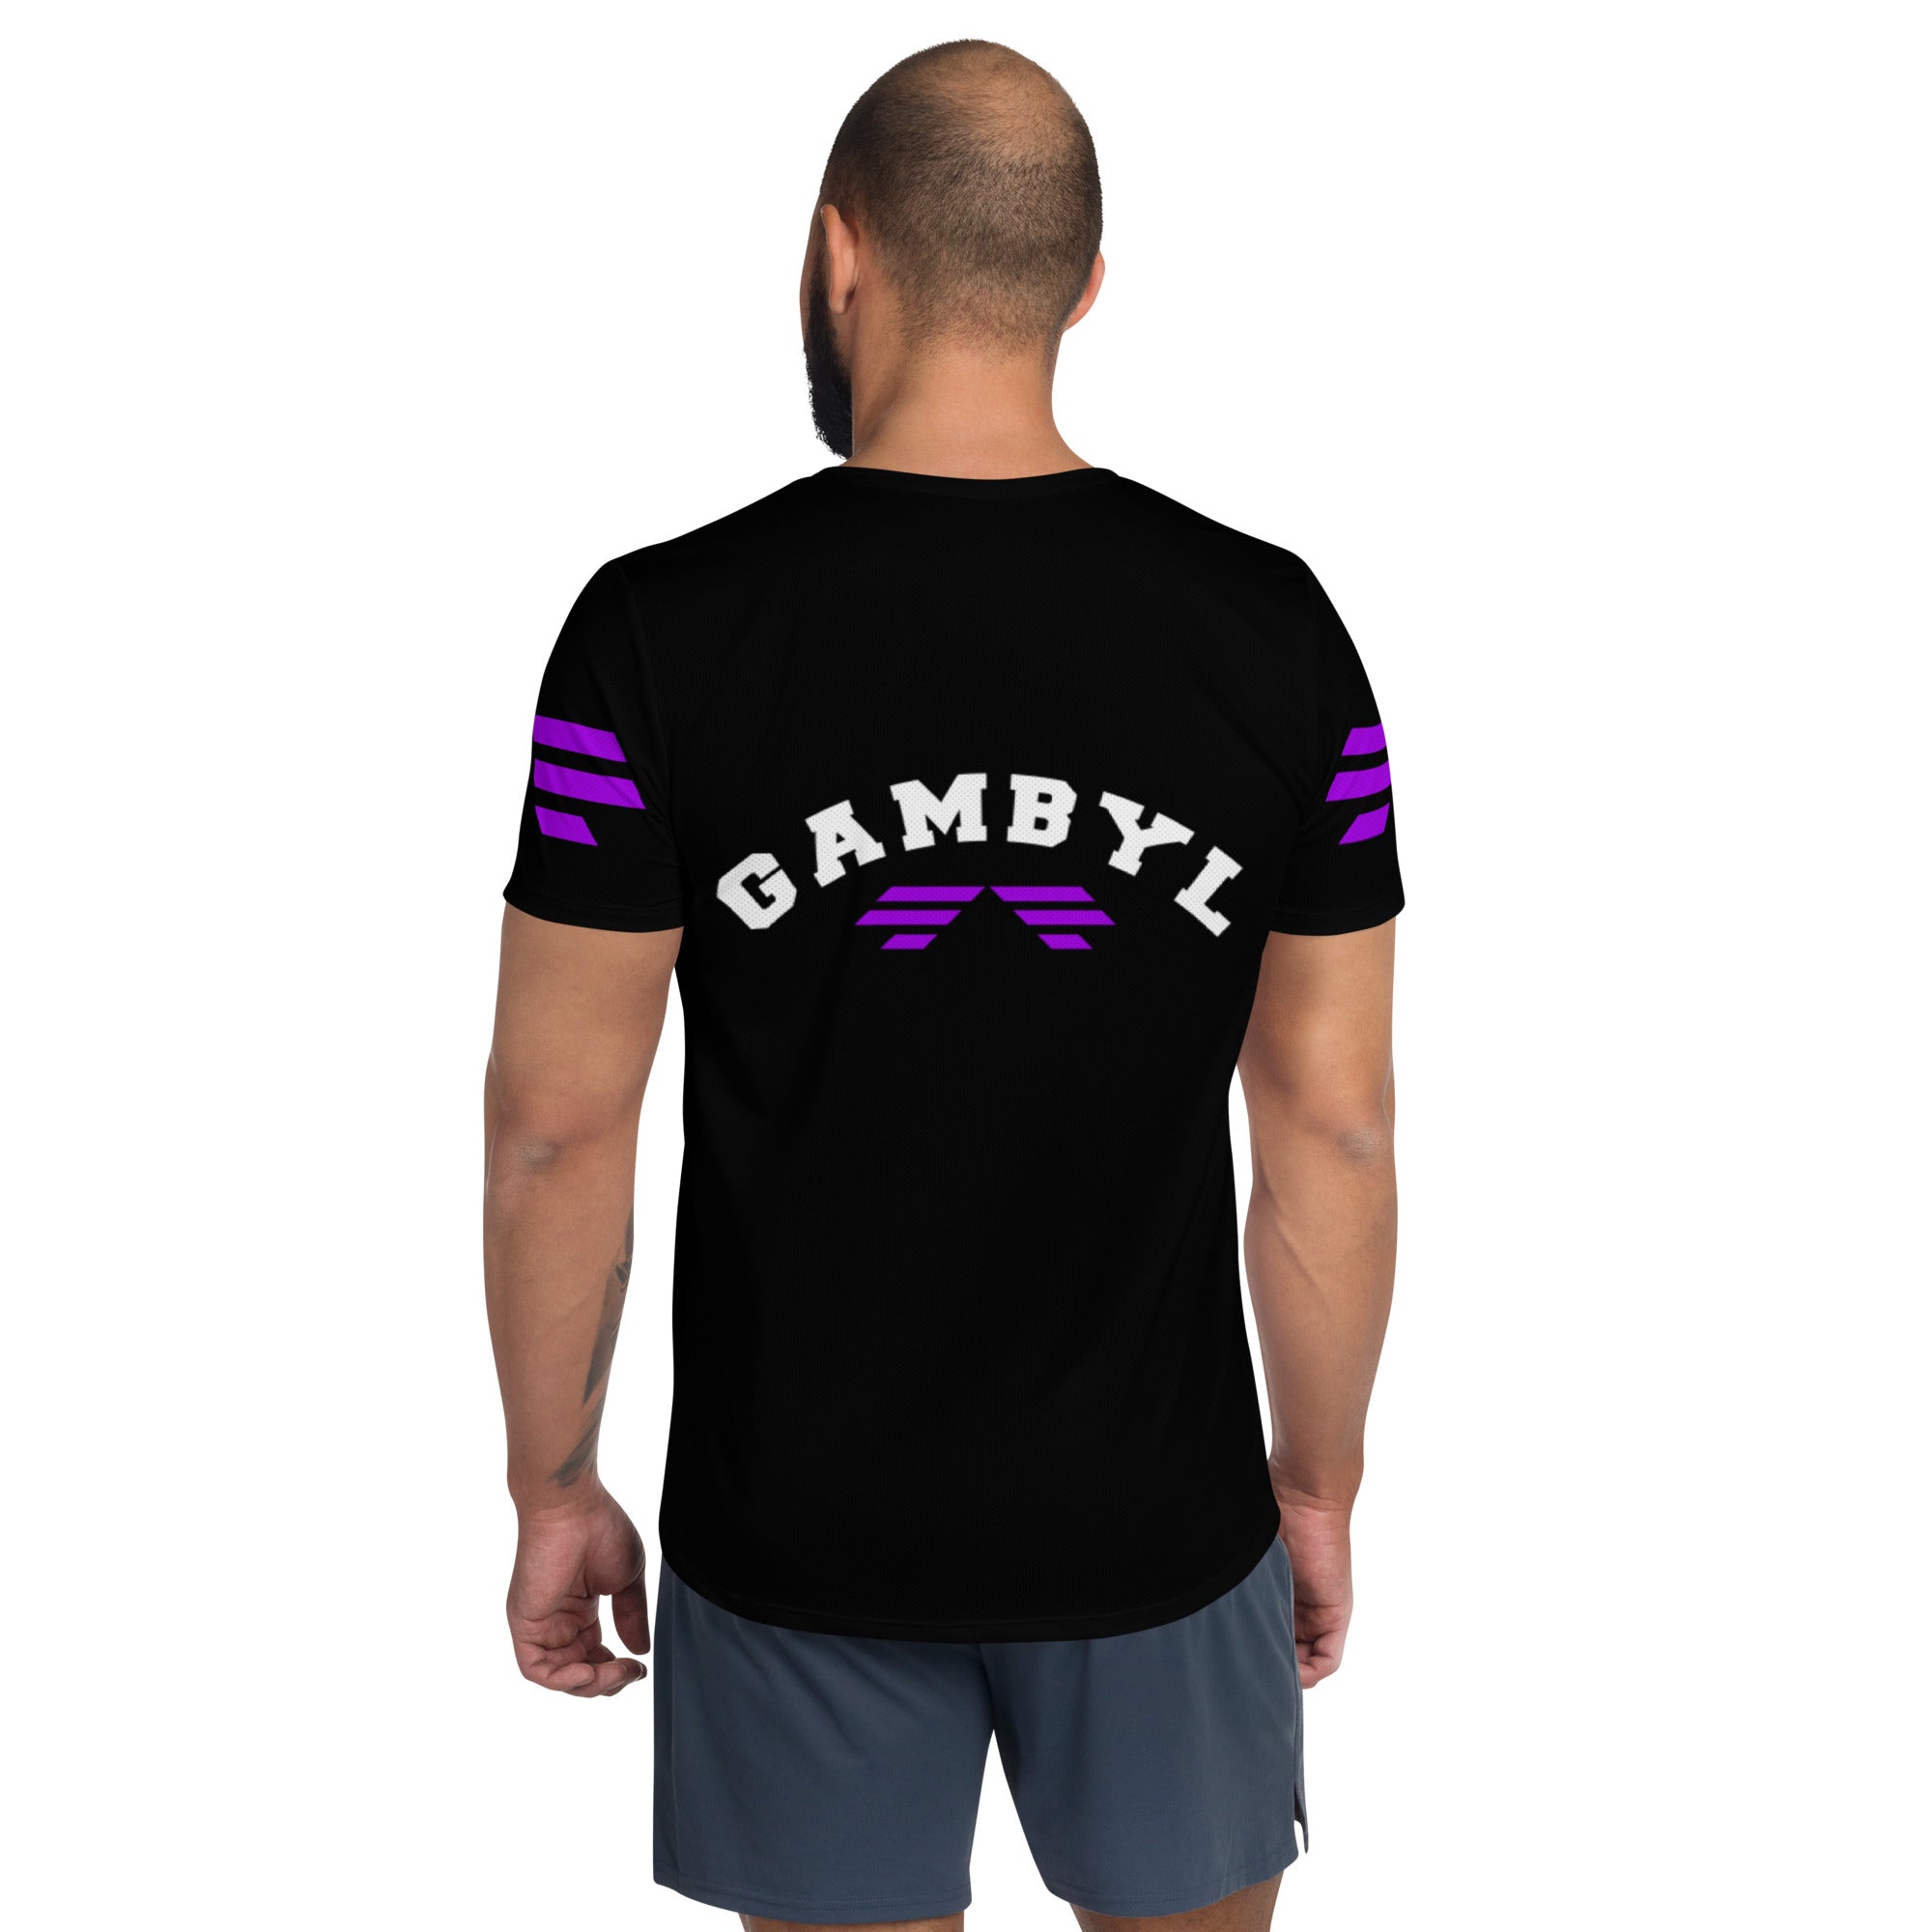 Gambyl Black Soccer Jersey